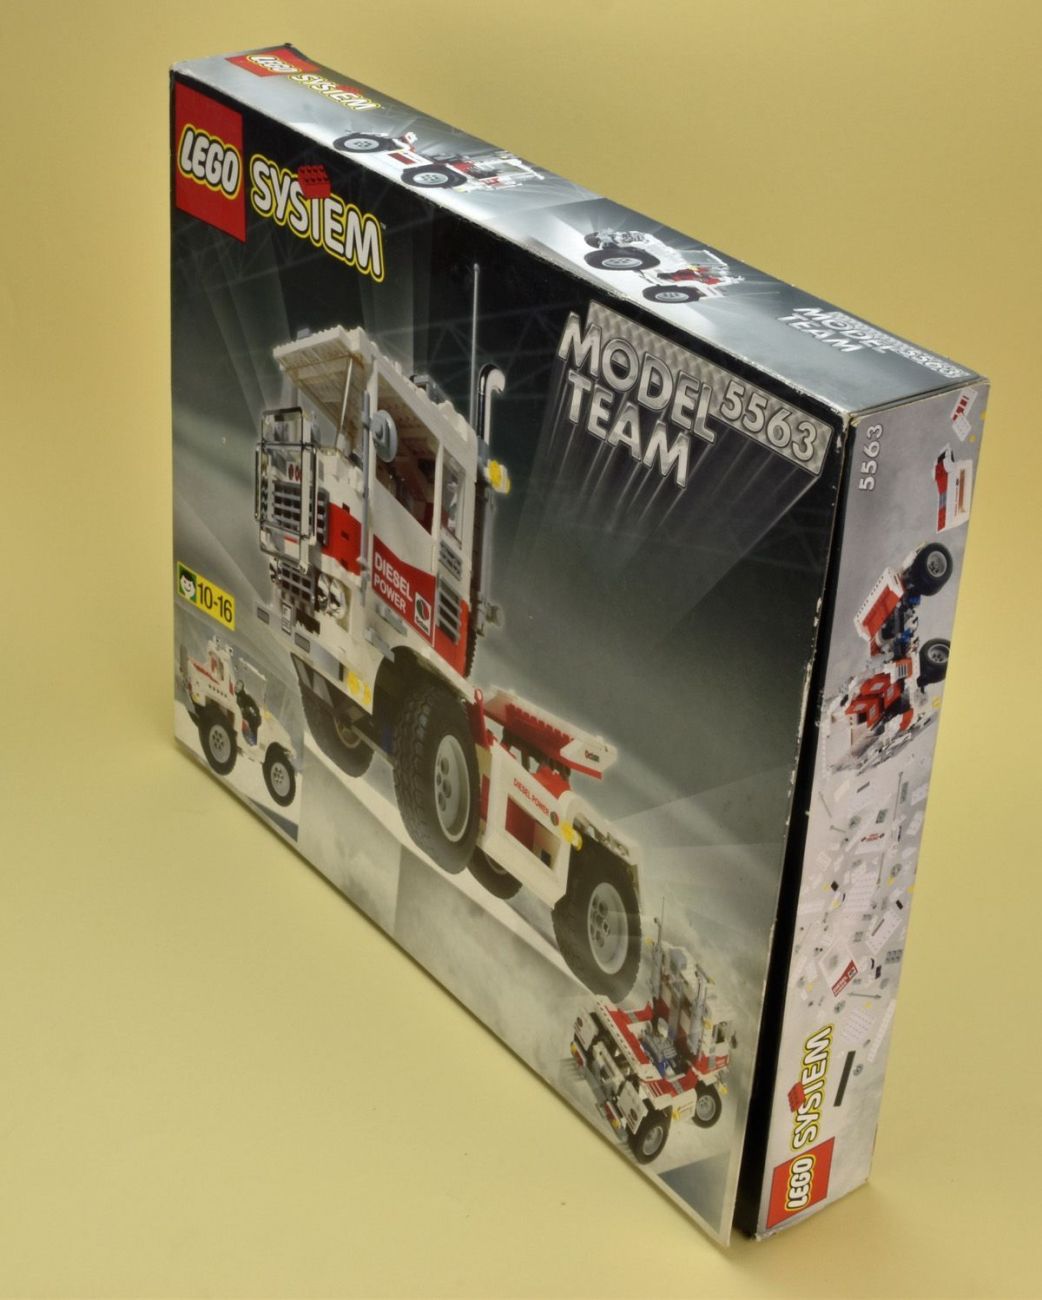 LEGO 5563 Racing Truck